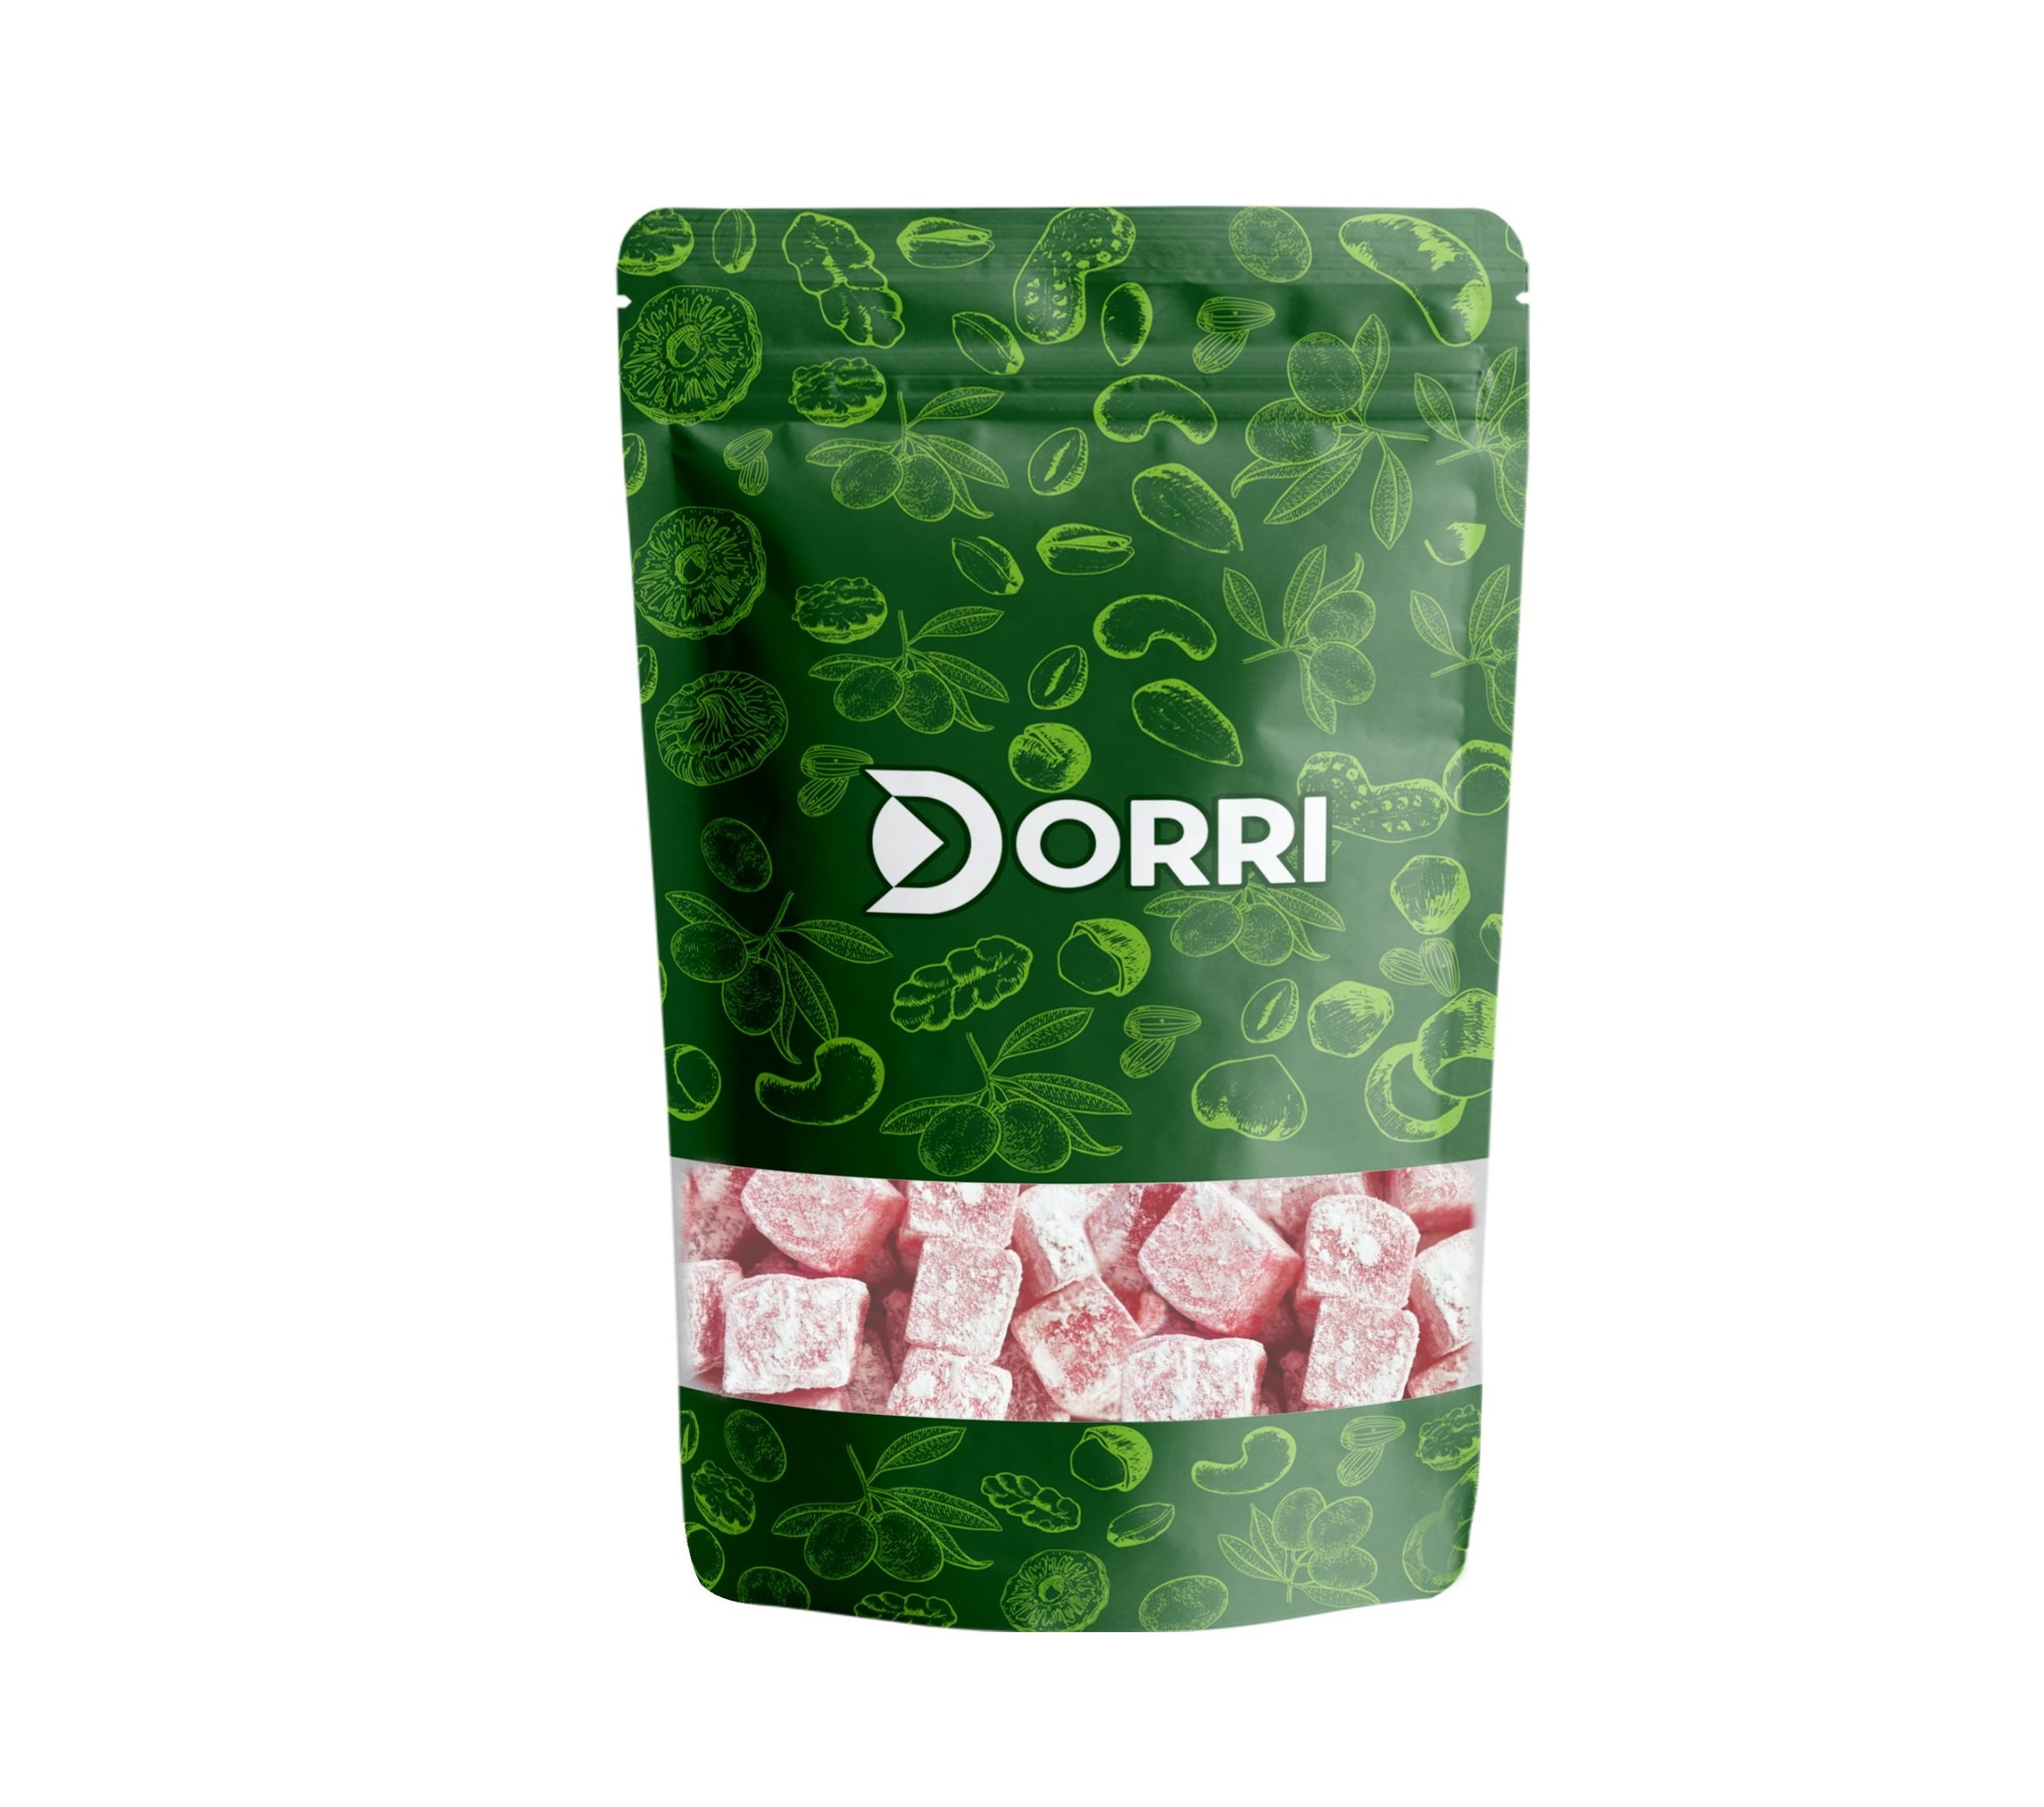 Dorri - Turkish Delight Lychee